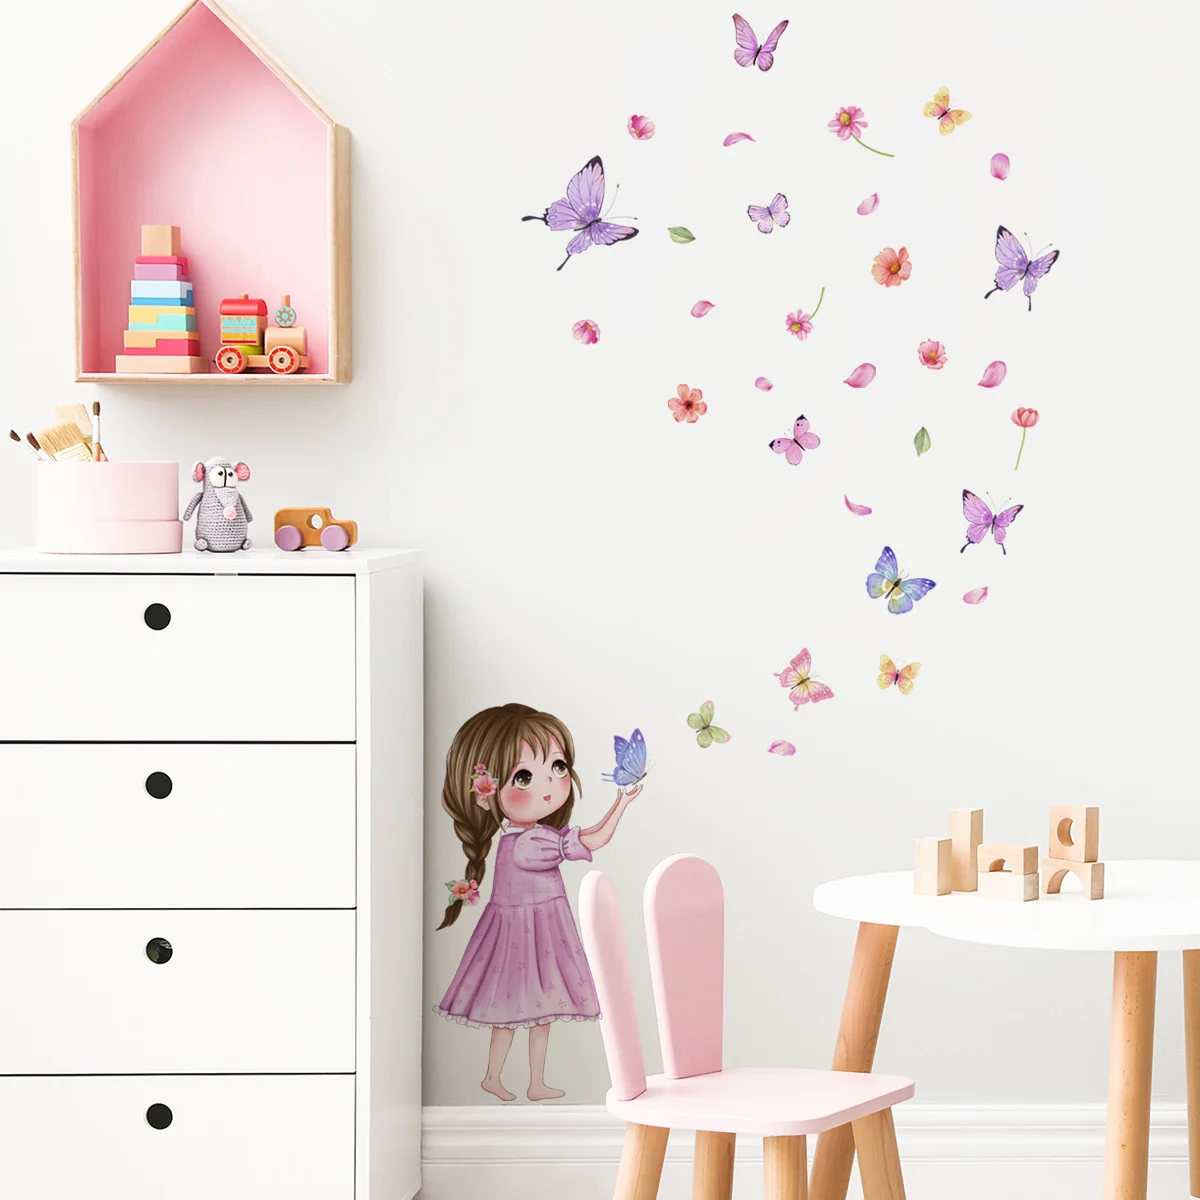 Girls' Heart Dreamy Kids' Room Bed Side Case Decor DIY Self-paste Room Creative Decorative Butterflies Decor Wall Stickers